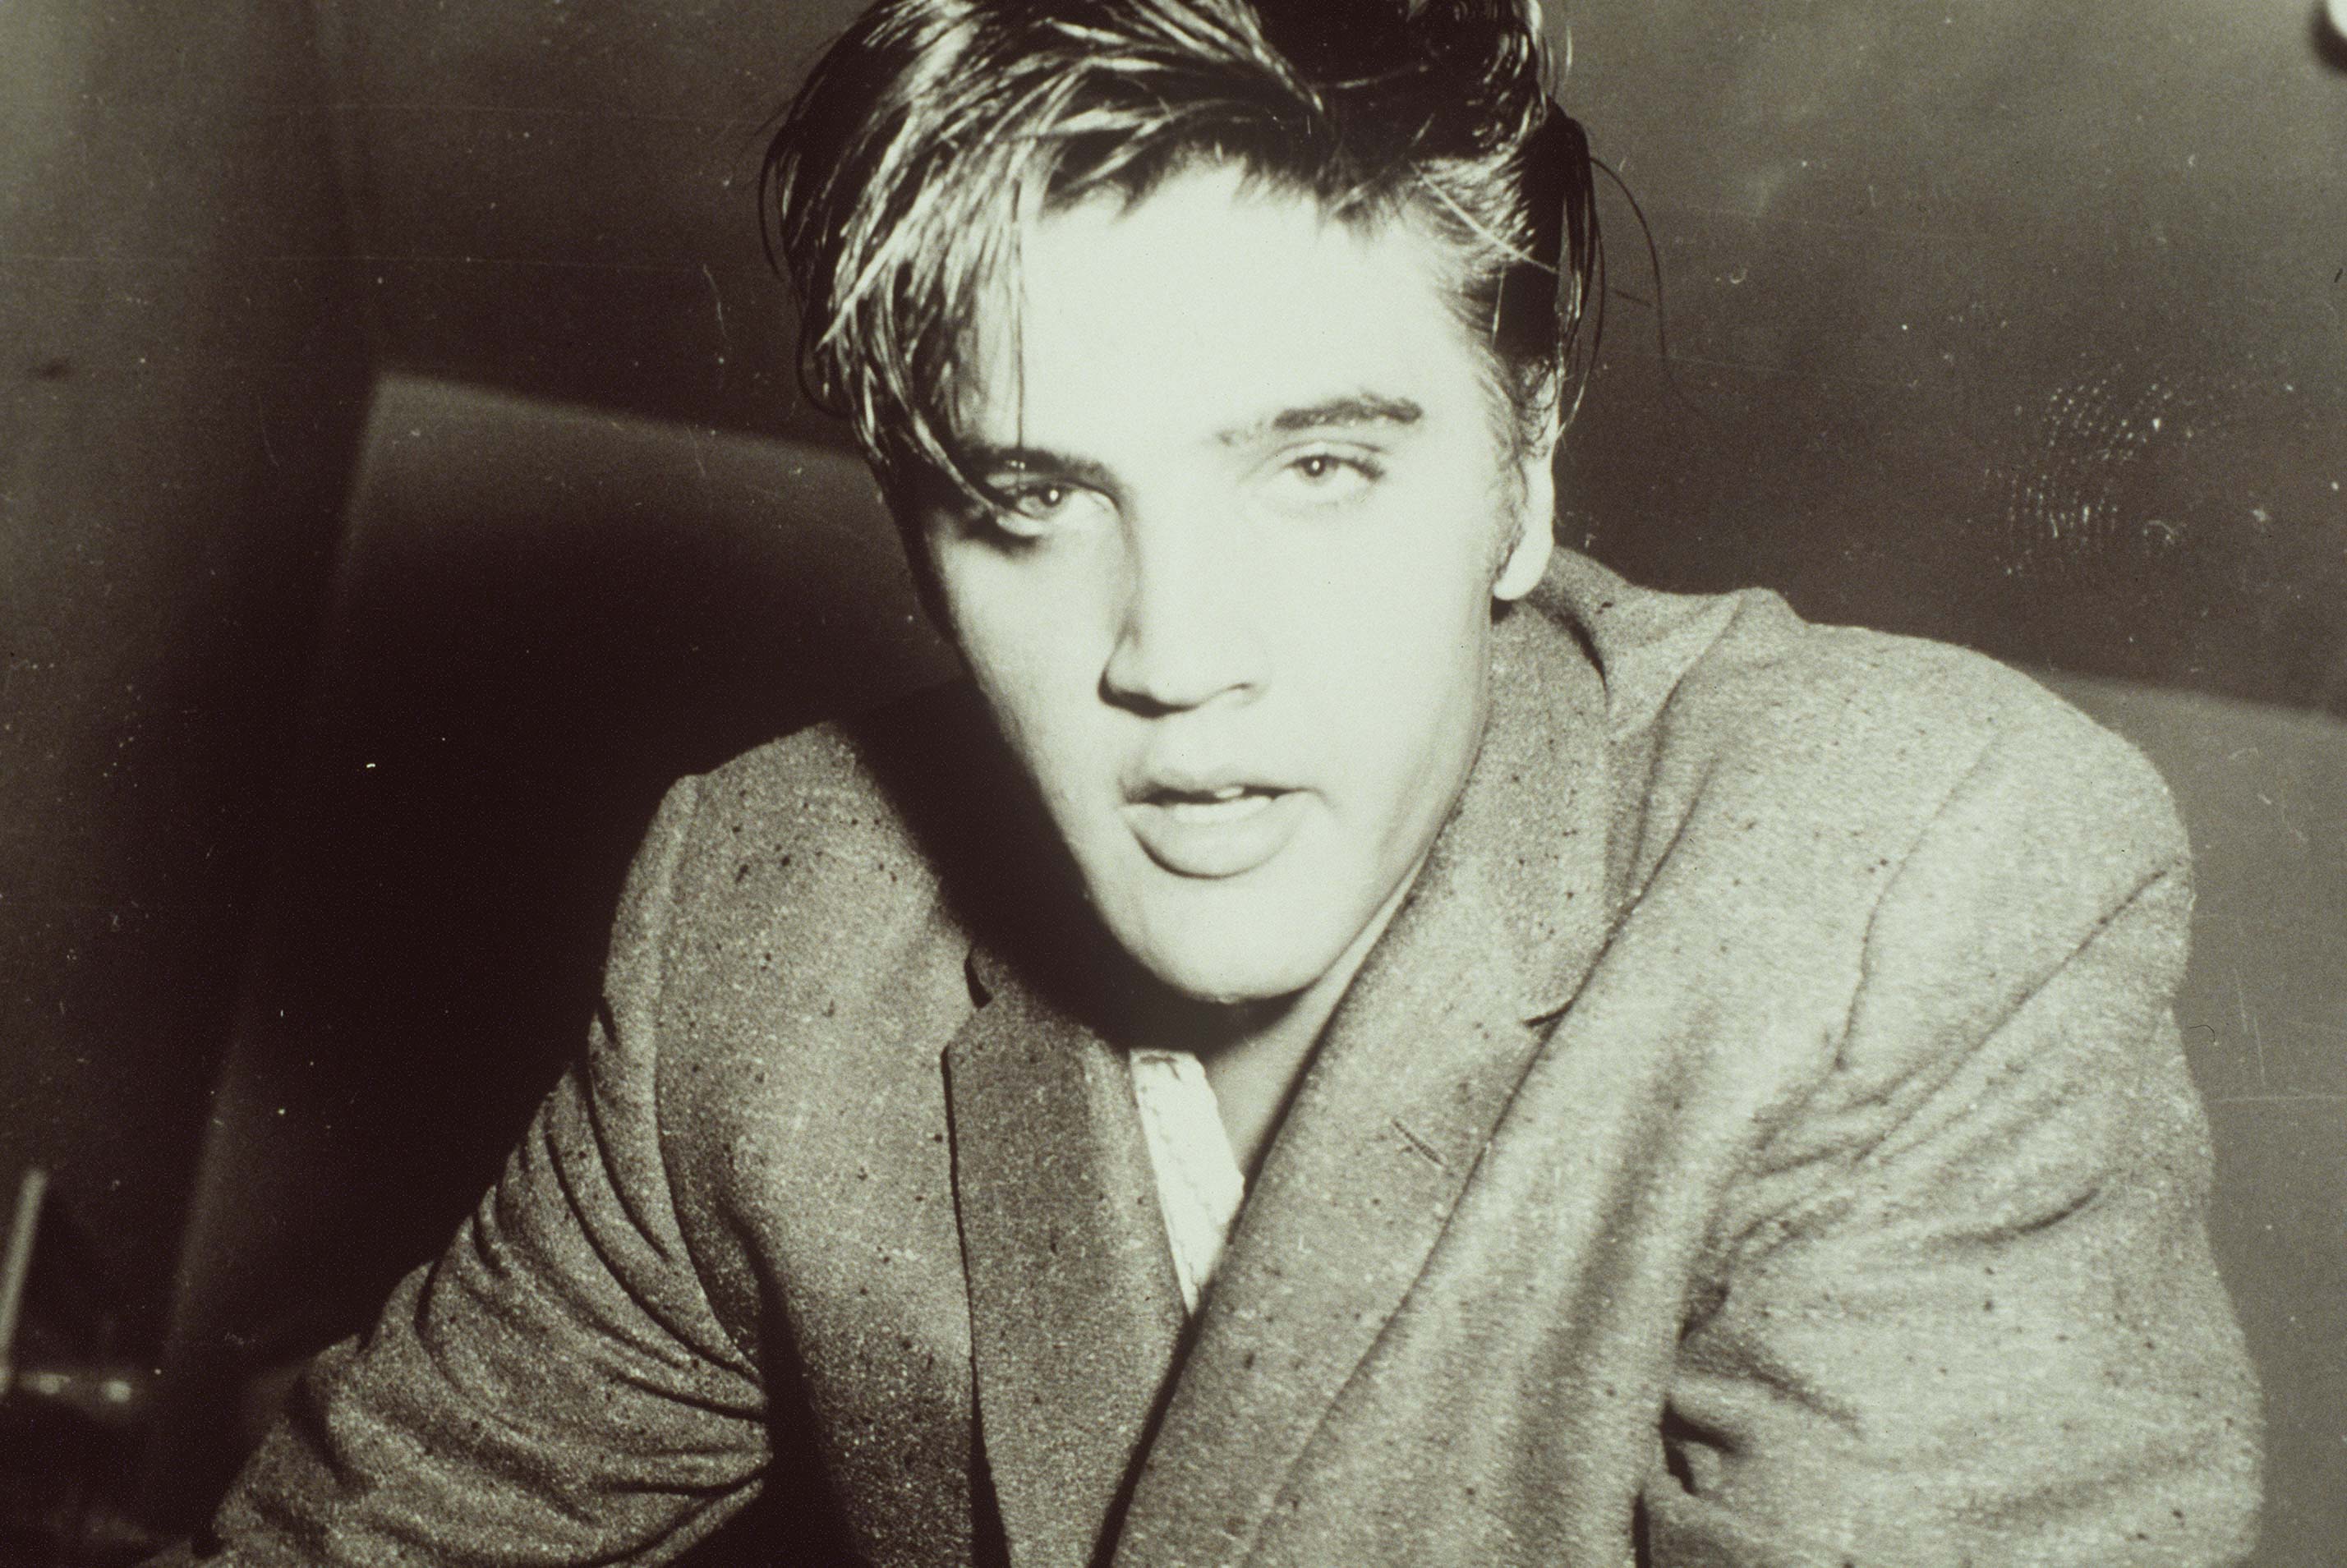 Elvis Presley photo 38 of 72 pics, wallpaper - photo #103379 - ThePlace2